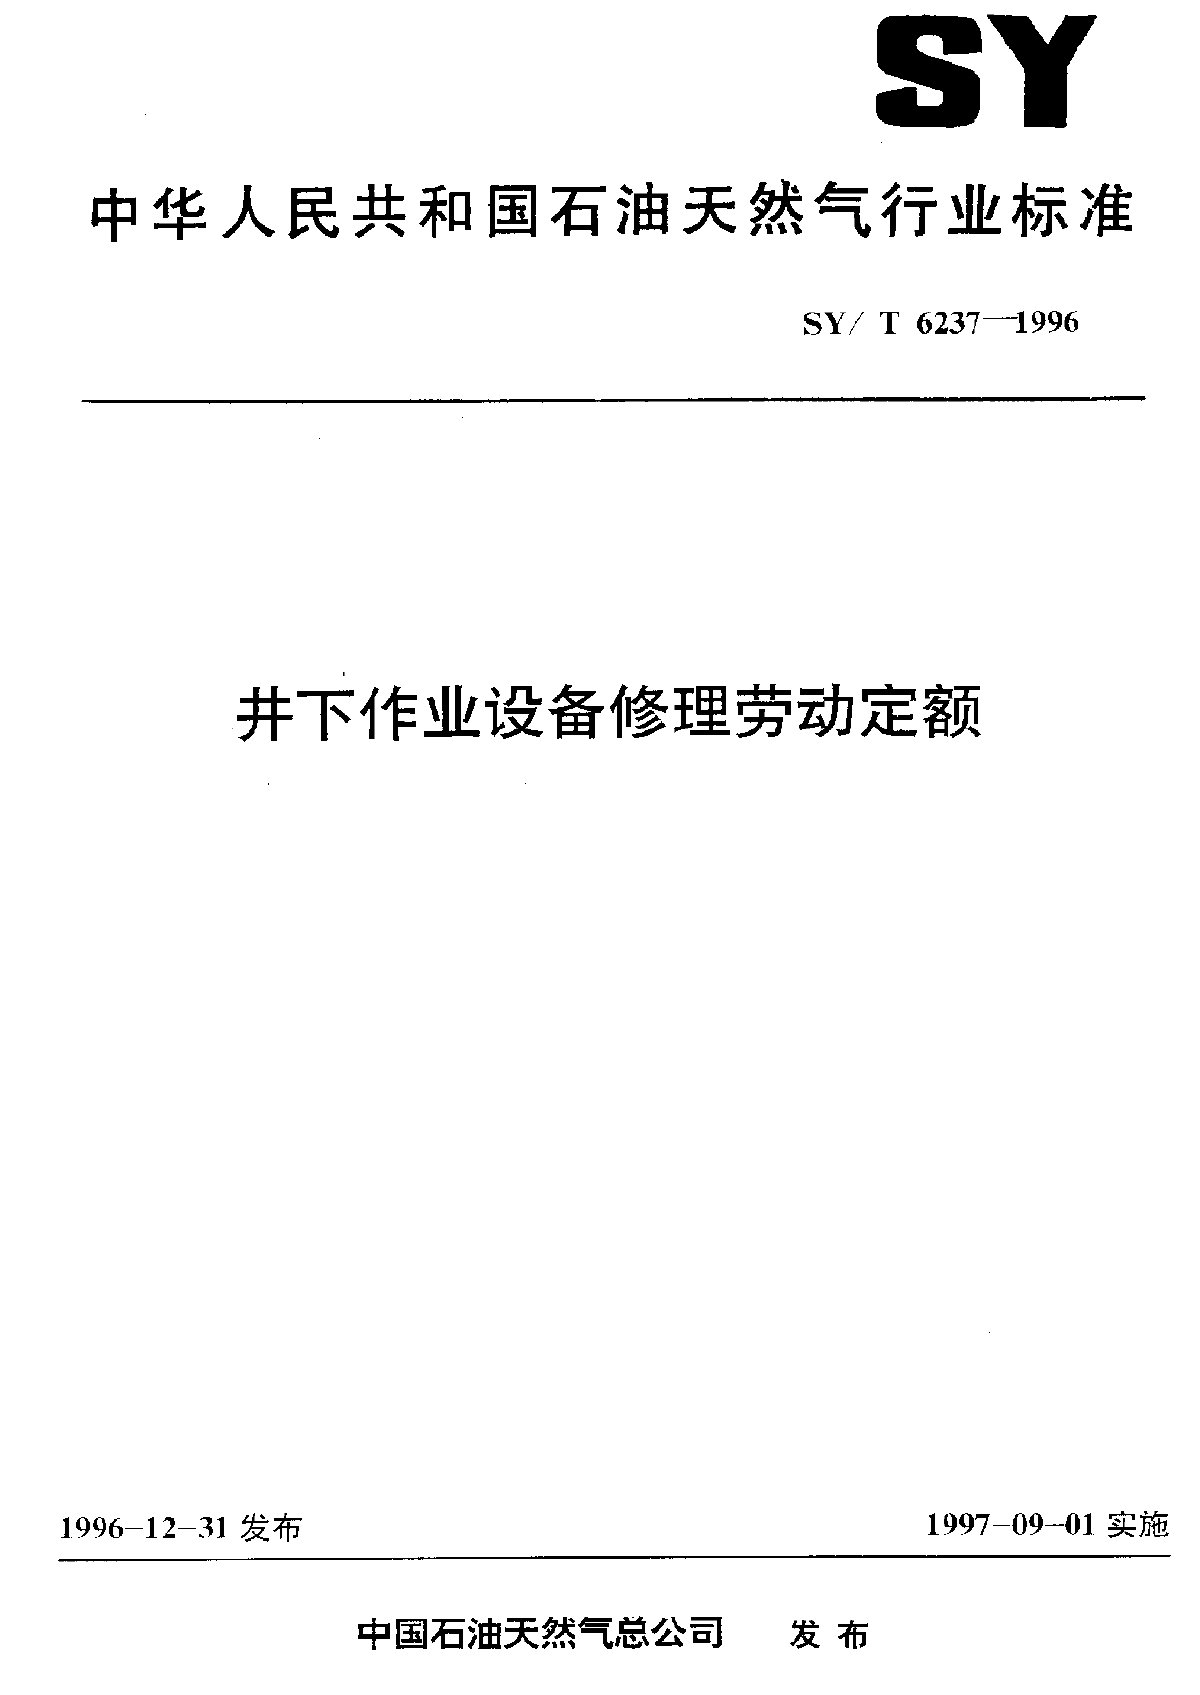 SY-T6237-1996井下作业设备修理劳动定额